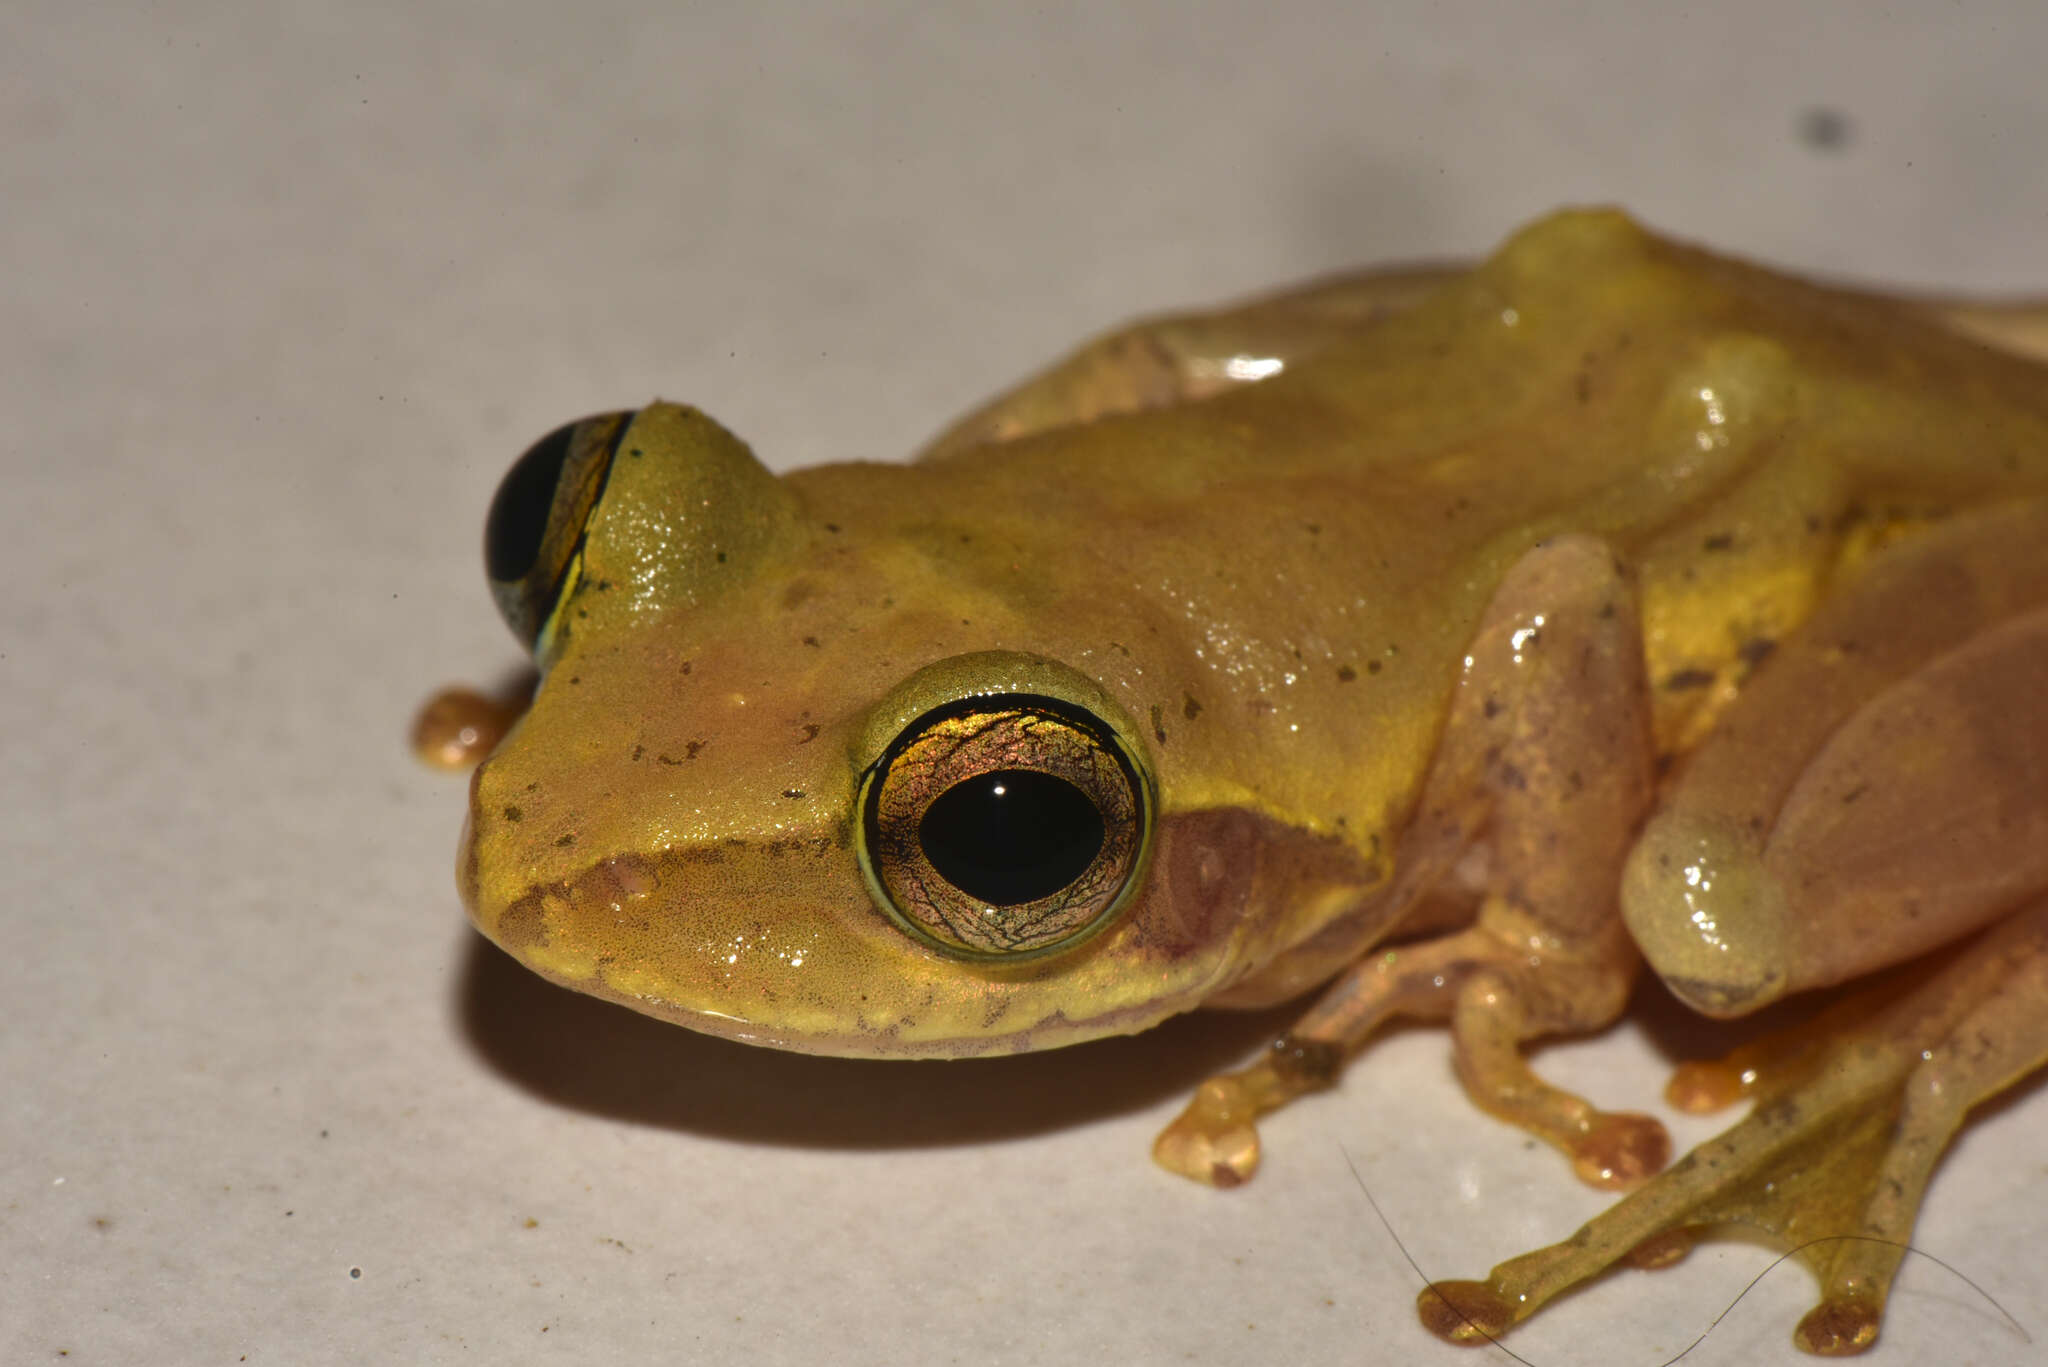 Image of Dumeril's Bright-eyed Frog